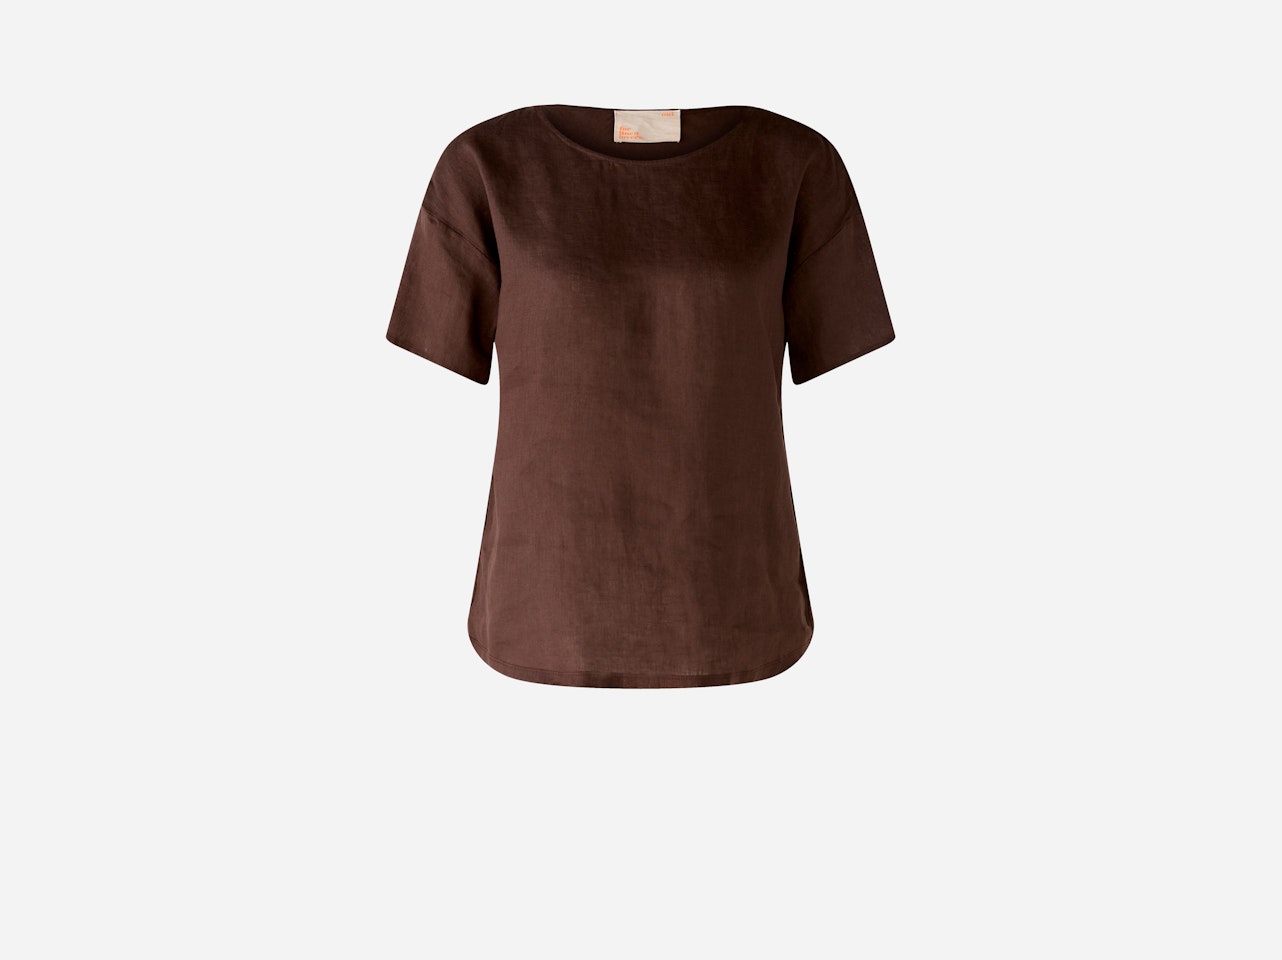 Bild 1 von Linen blouse with jersey patch in chocolate fudge | Oui